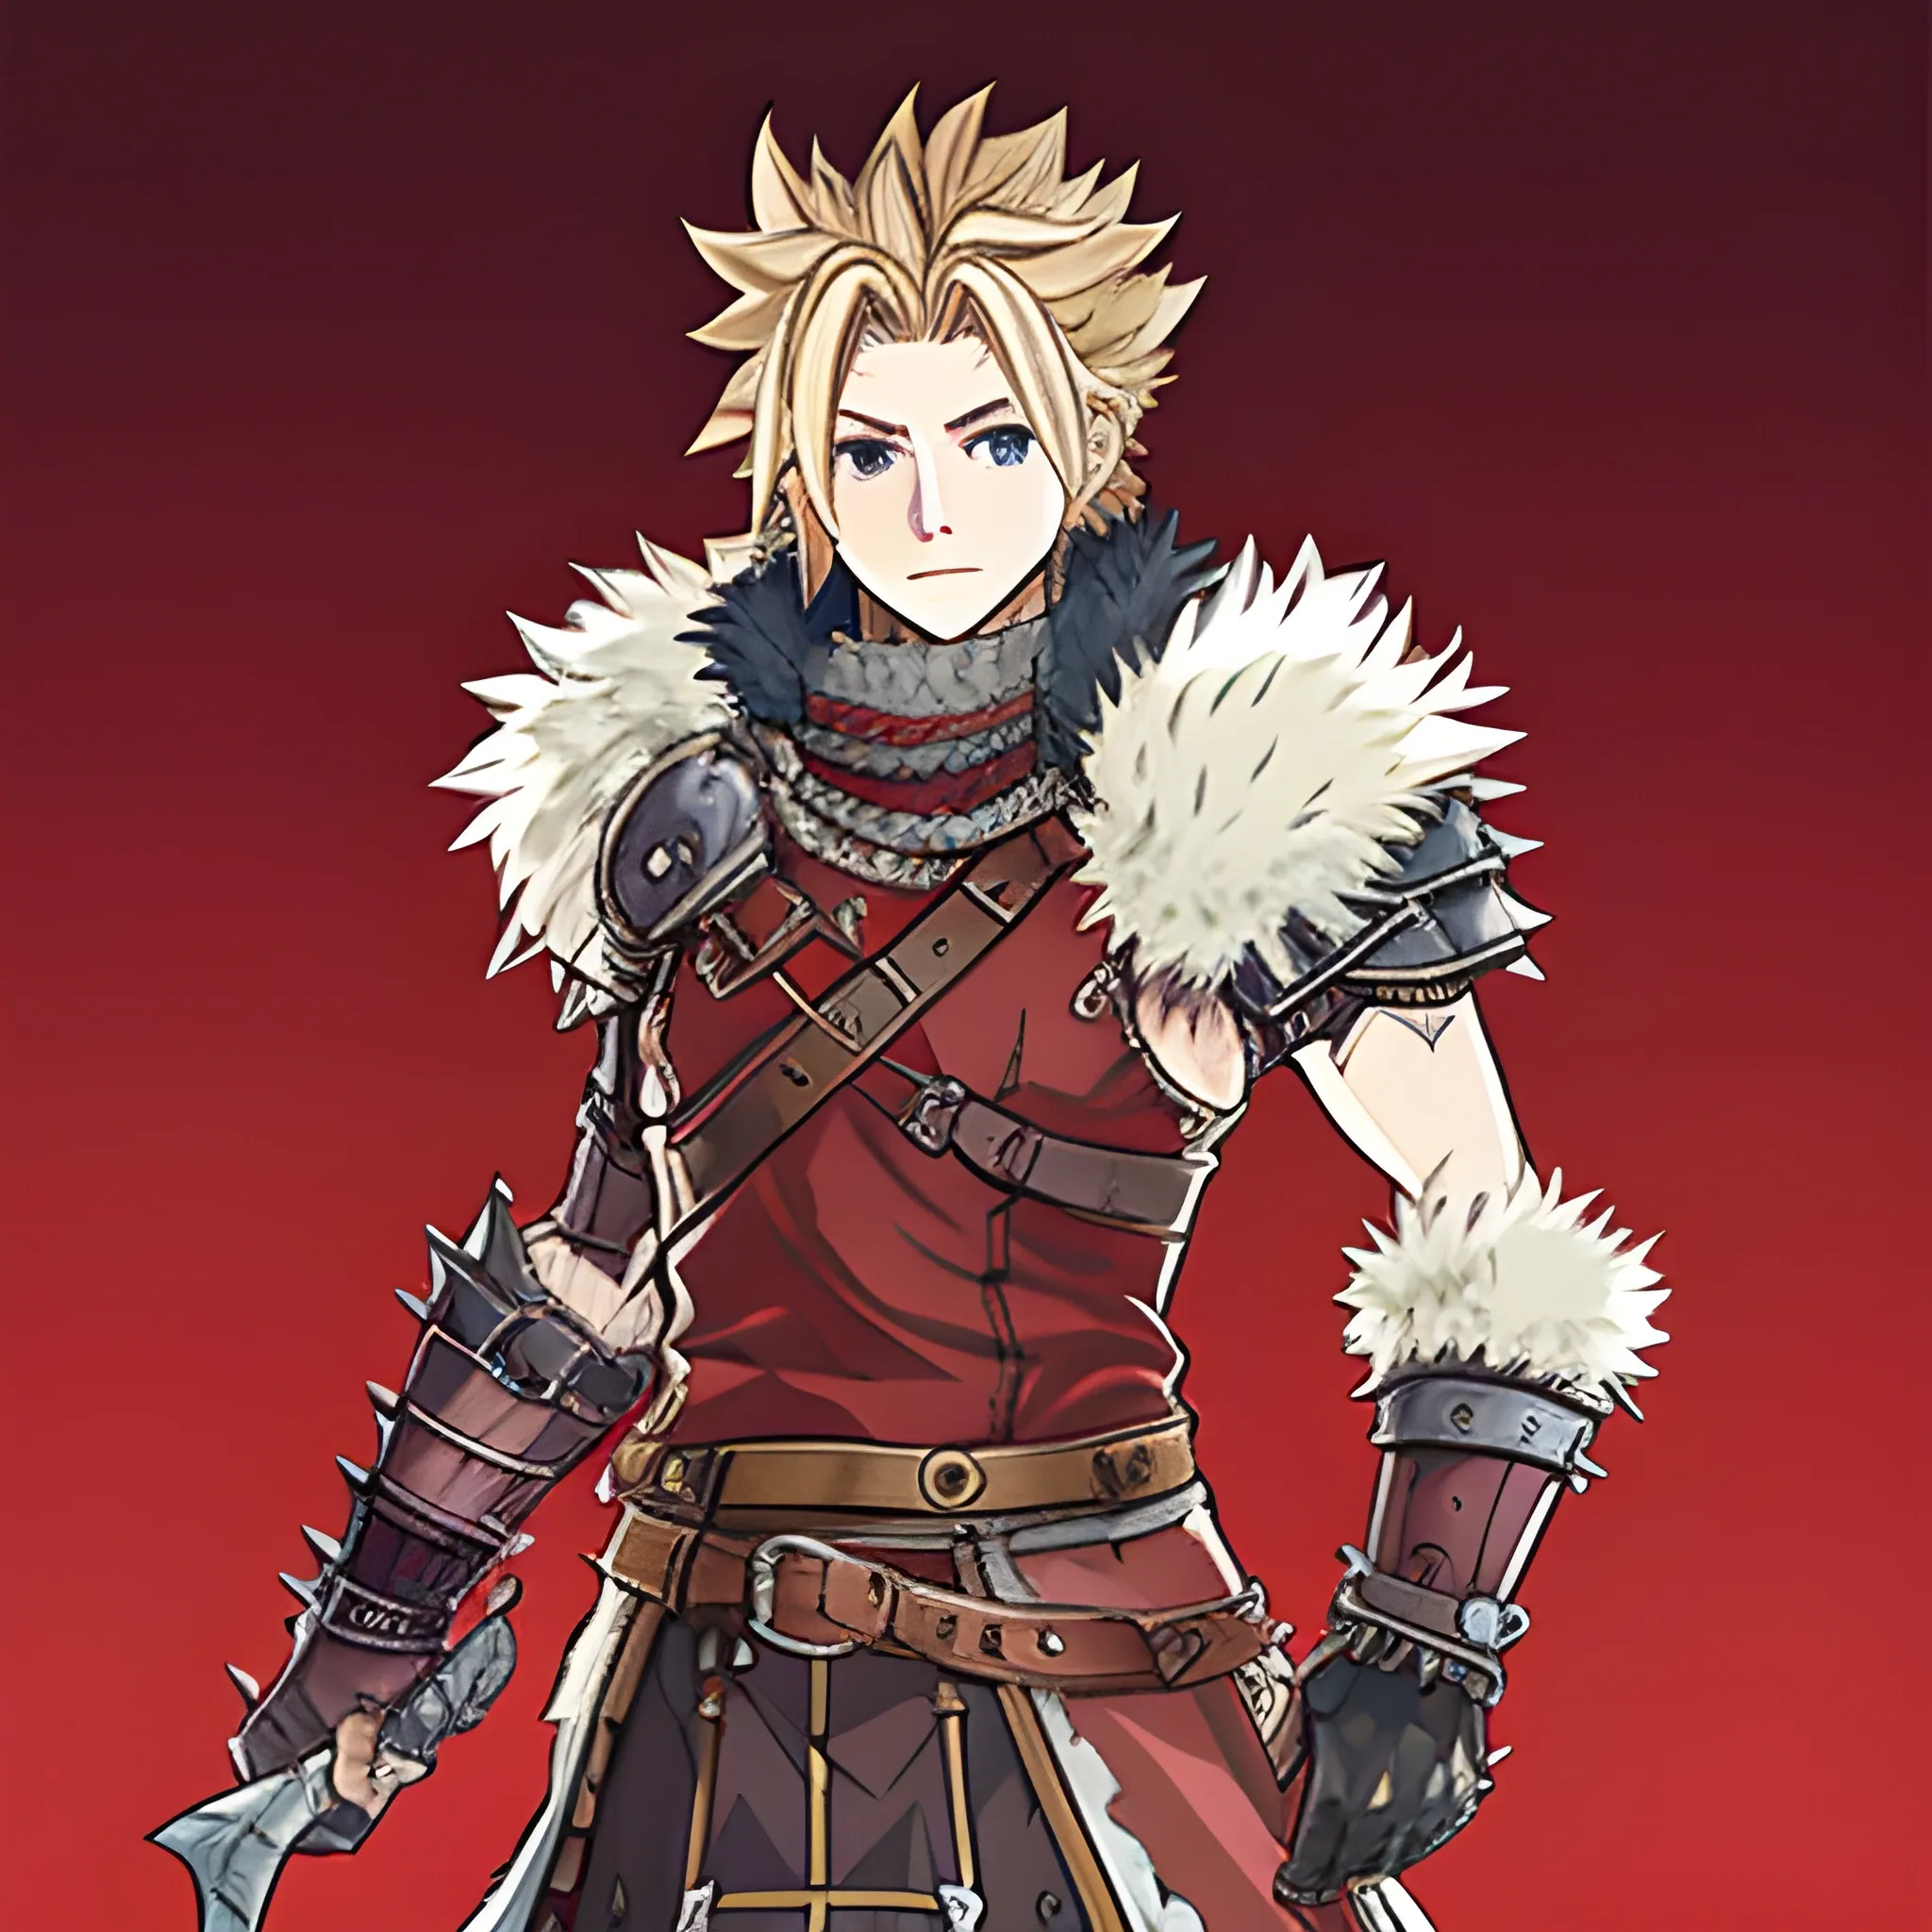 male warrior, spiky blonde hair, red fur armor, Octopath Traveler jrpg art style